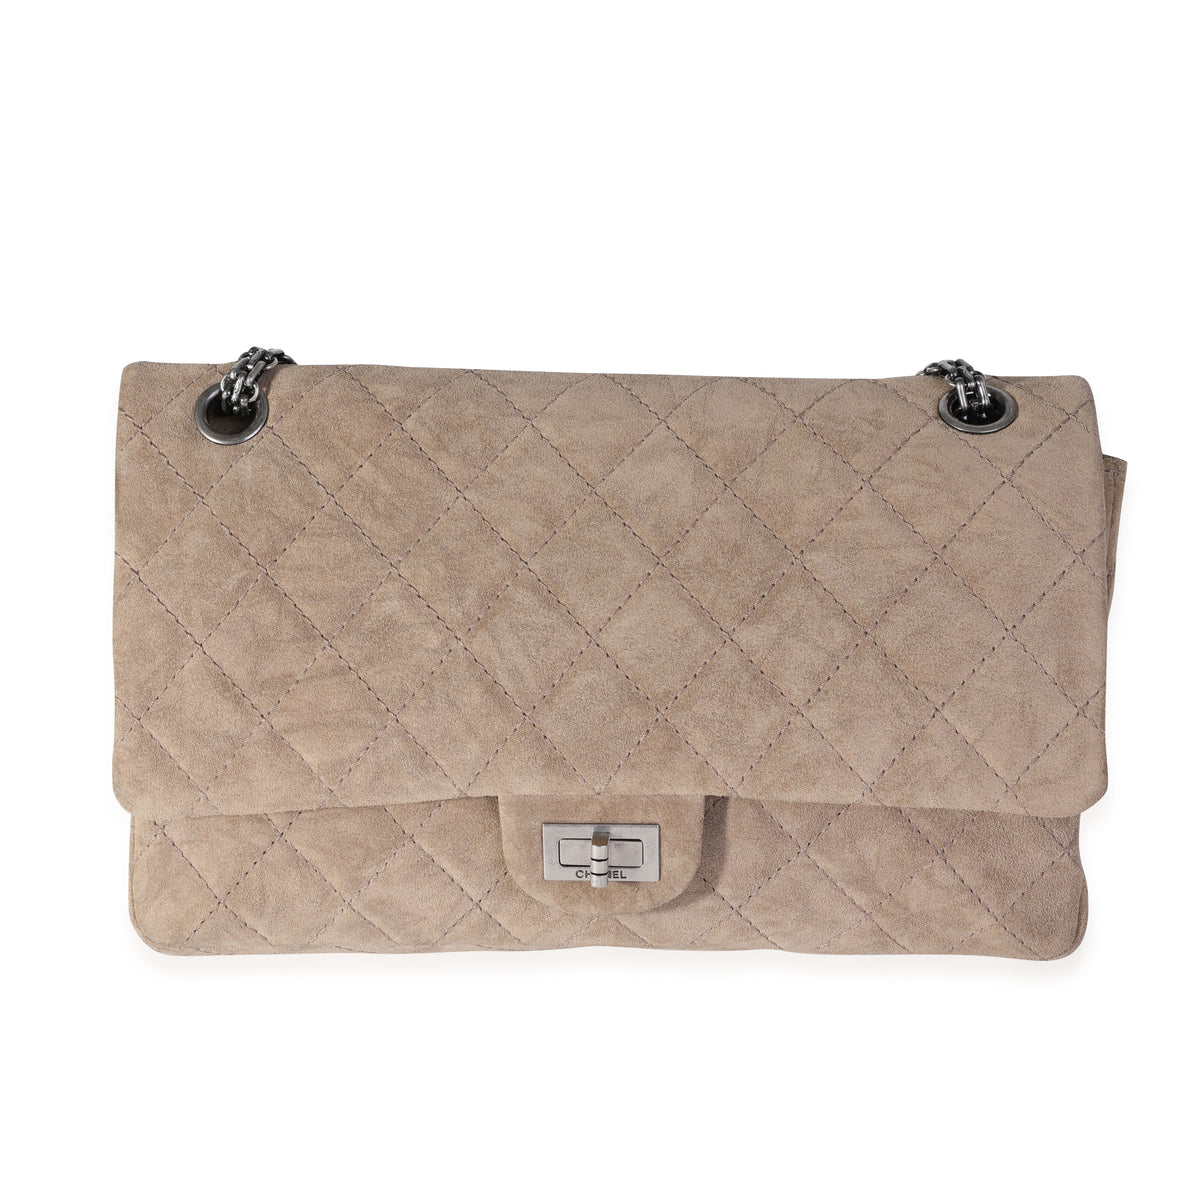 Chanel Beige Suede Calfskin 2.55 Reissue 226 Double Flap Bag